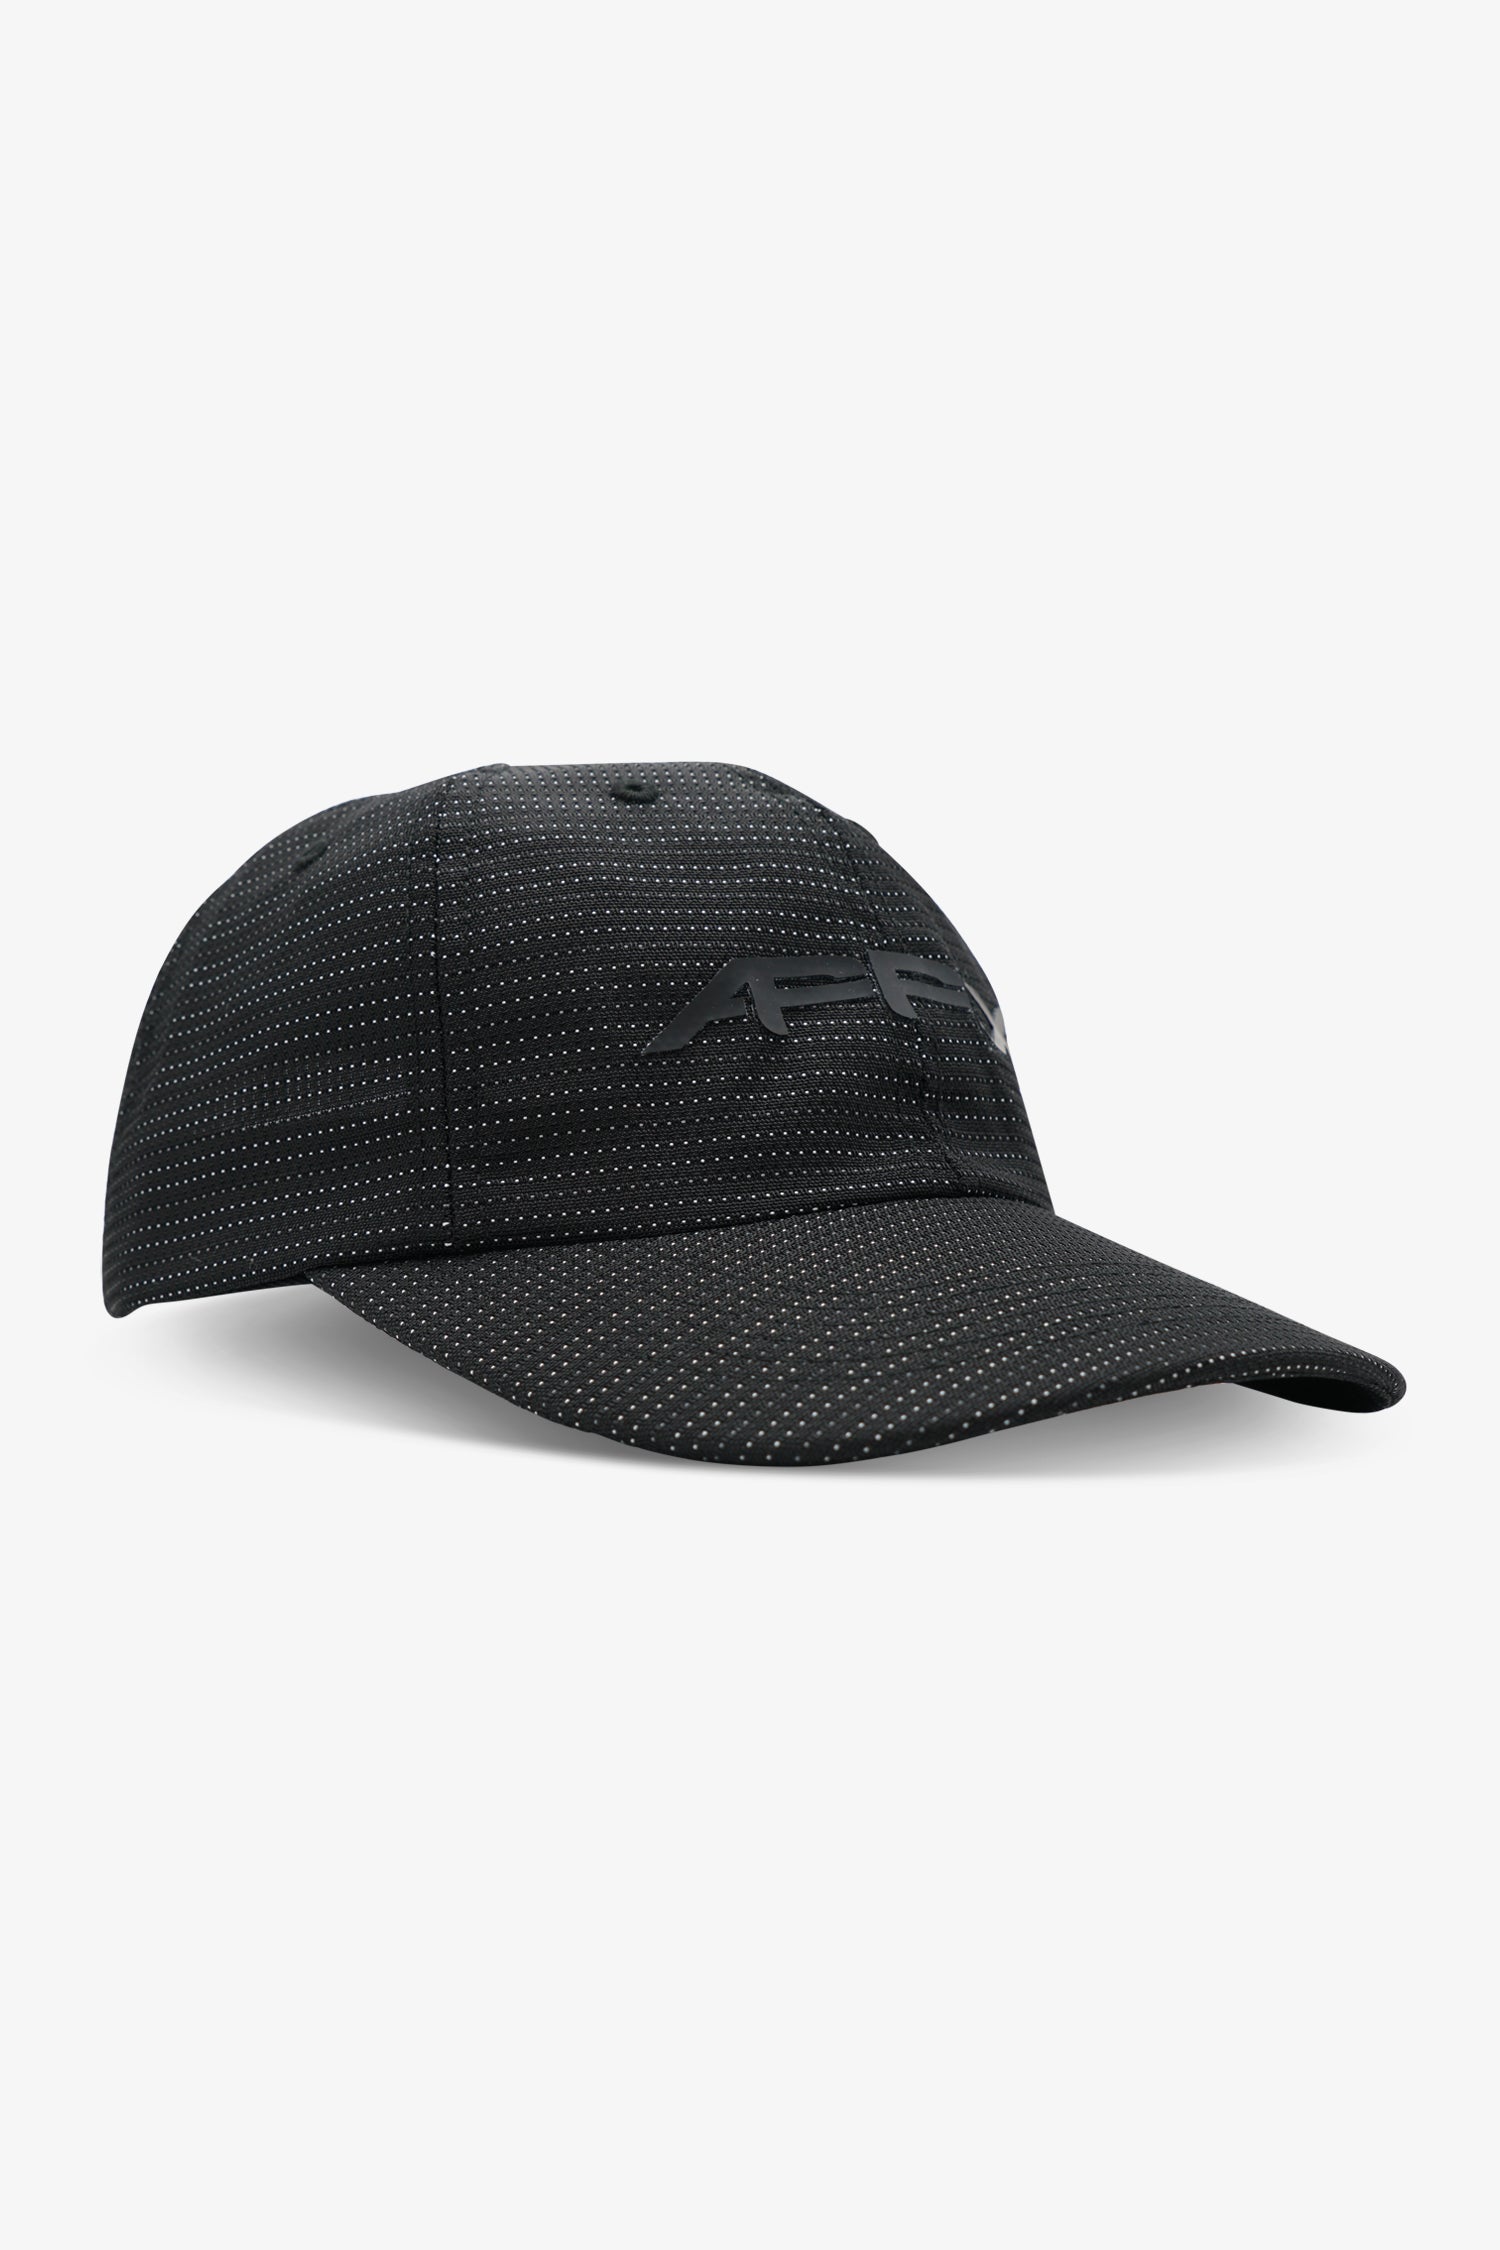 Selectshop FRAME - AFFIX Visibility Cap Headwear Dubai